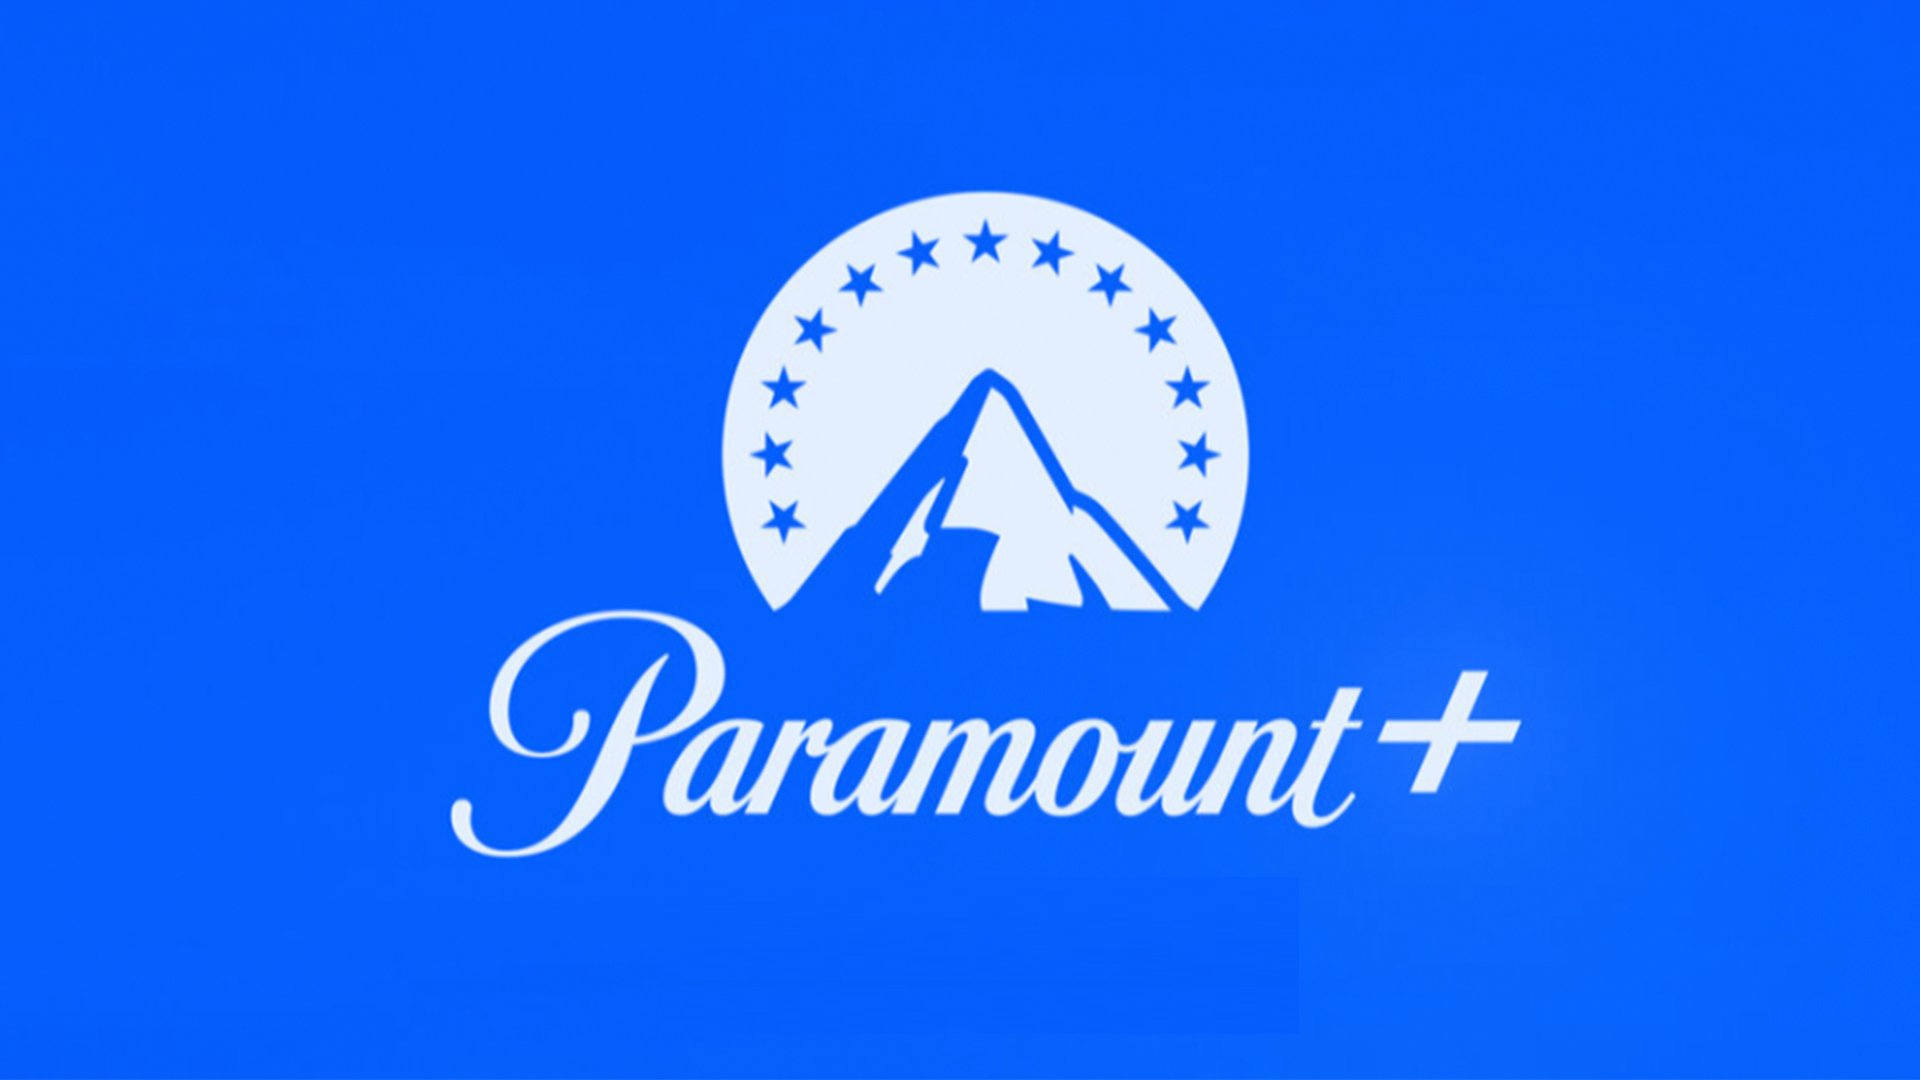 Paramount will not censor historic films, TV shows. AM 1100 The Flag WZFG